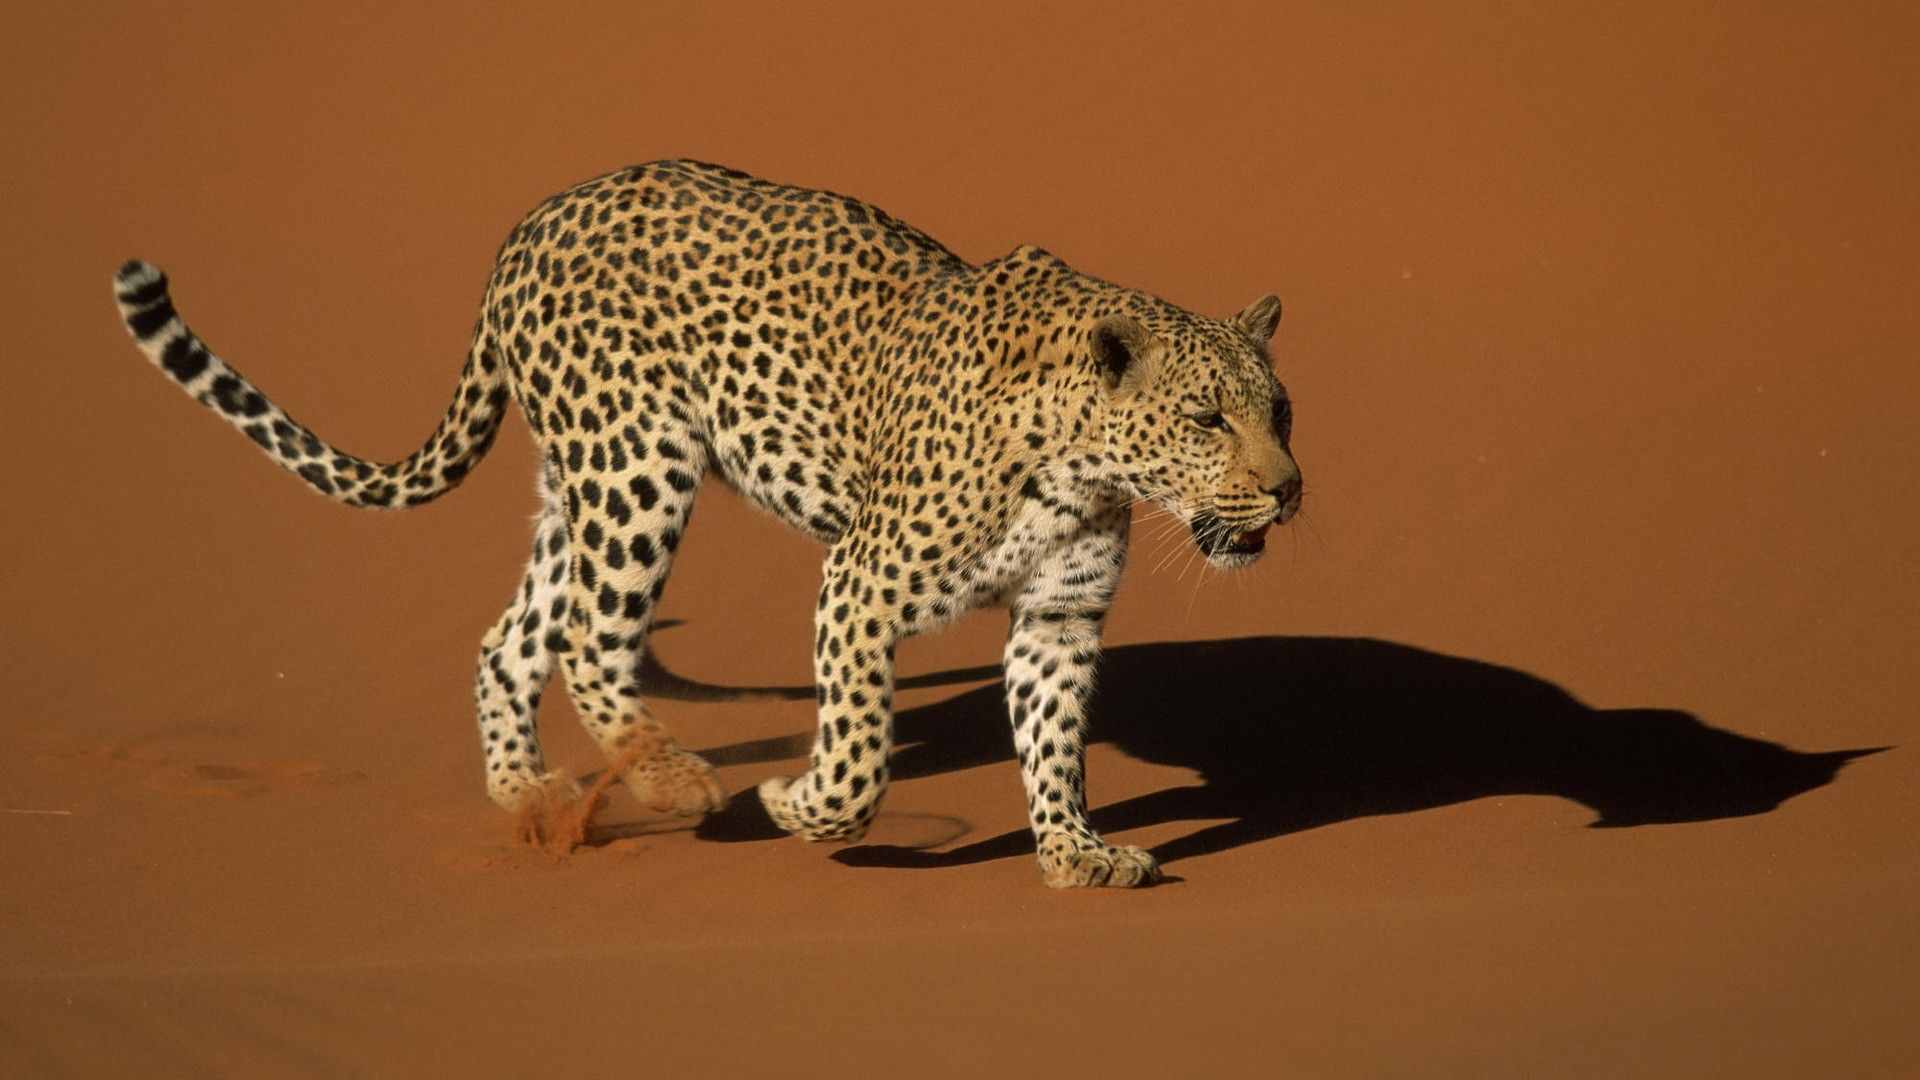 Sand animals Namibia leopards National Park wallpaperx1080